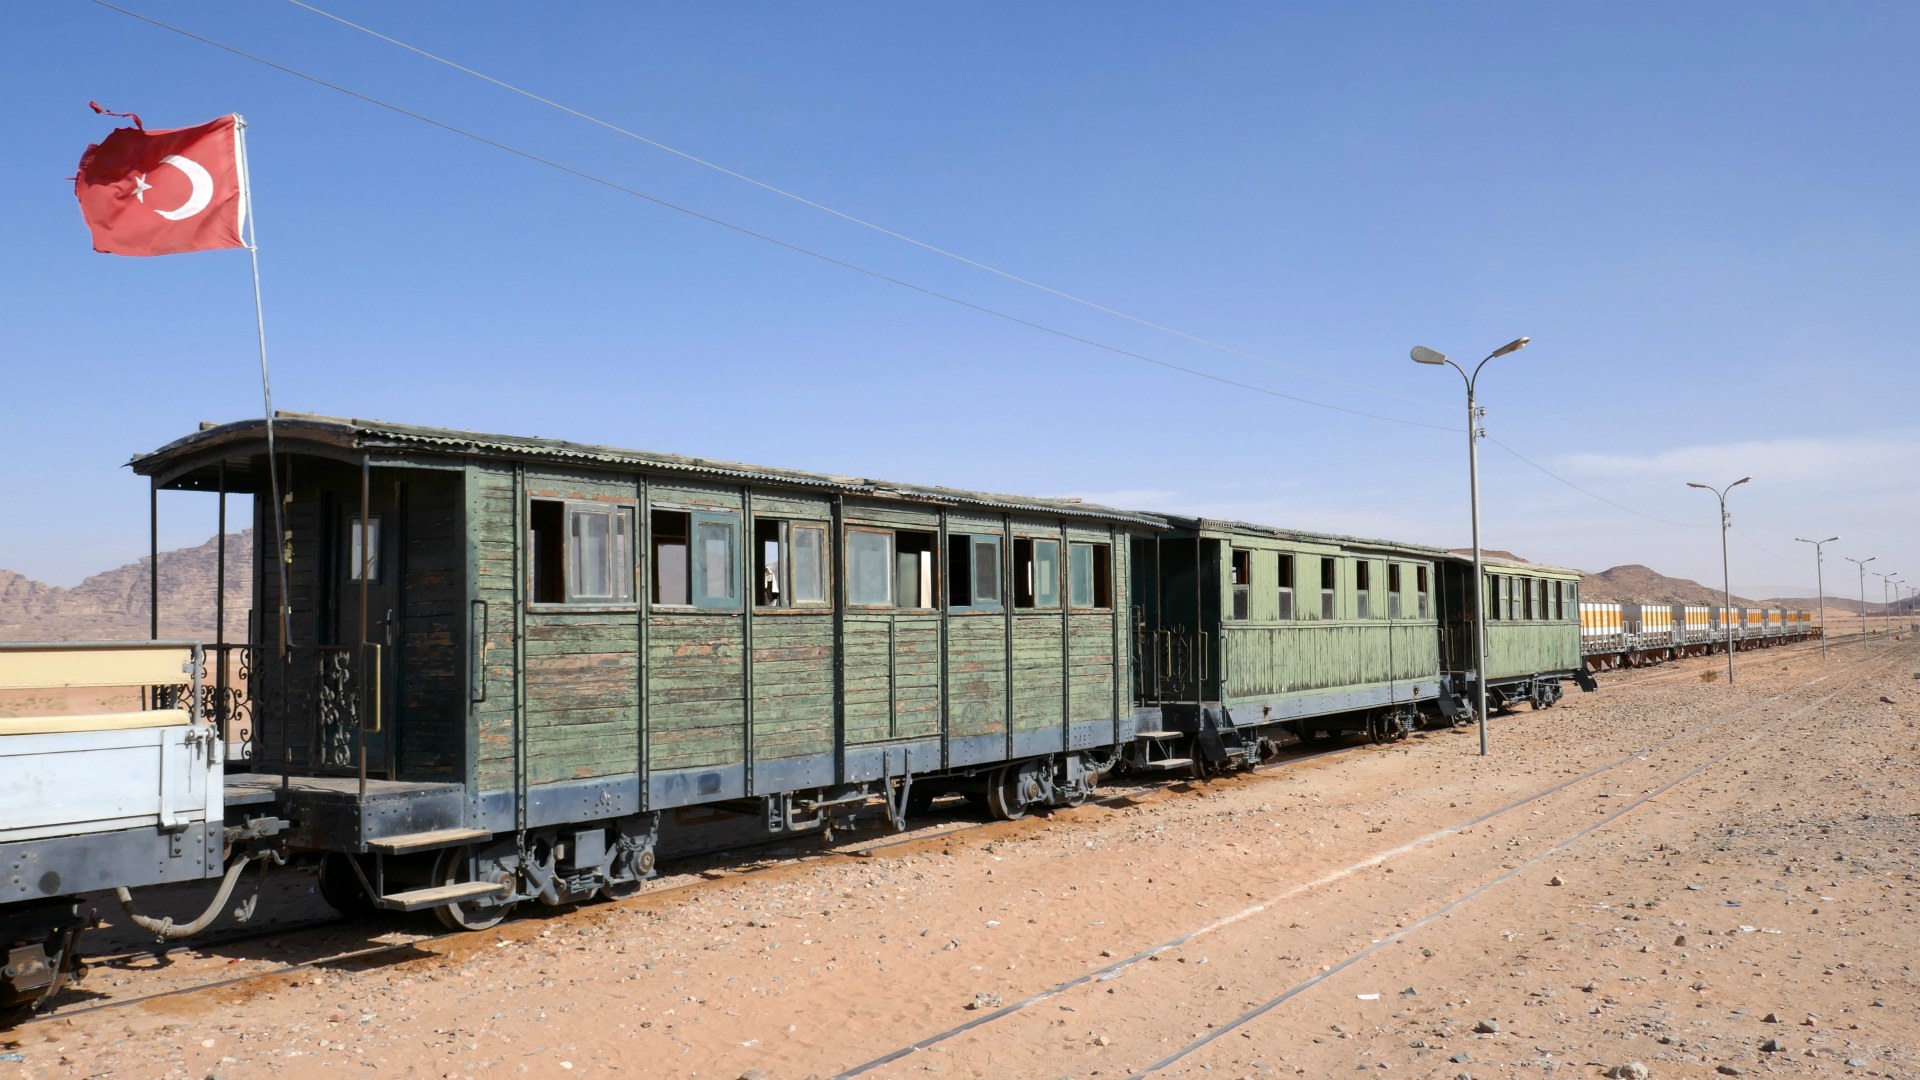 Hejaz Railway carriages, Wadi Rum Station